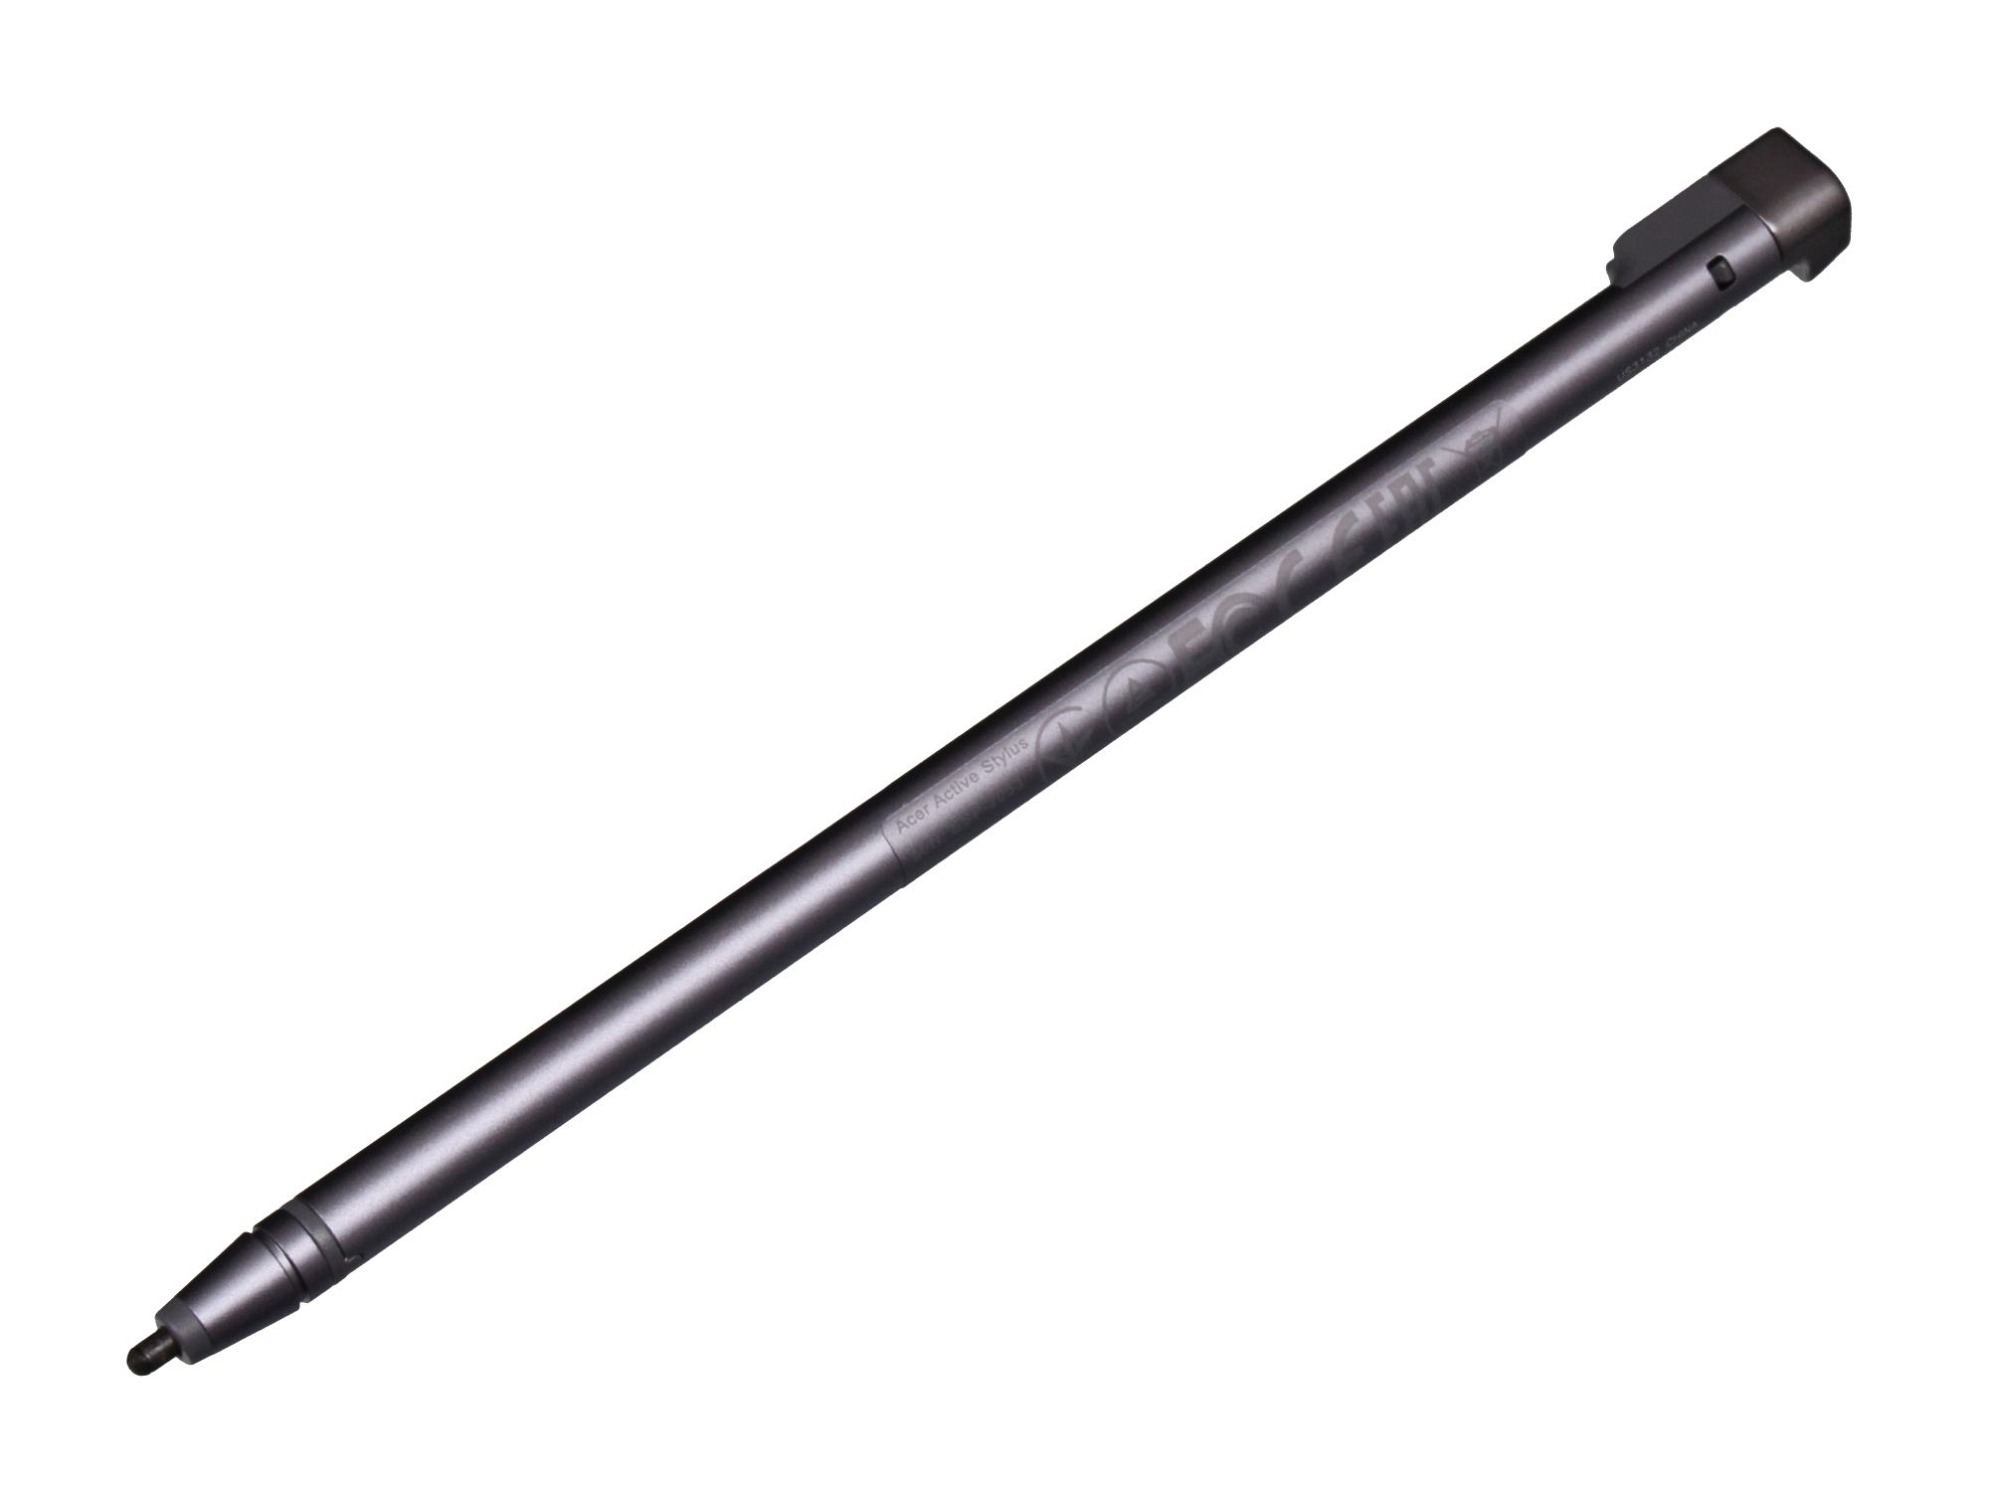 Acer ESP-212-01B-6 Stylus Pen